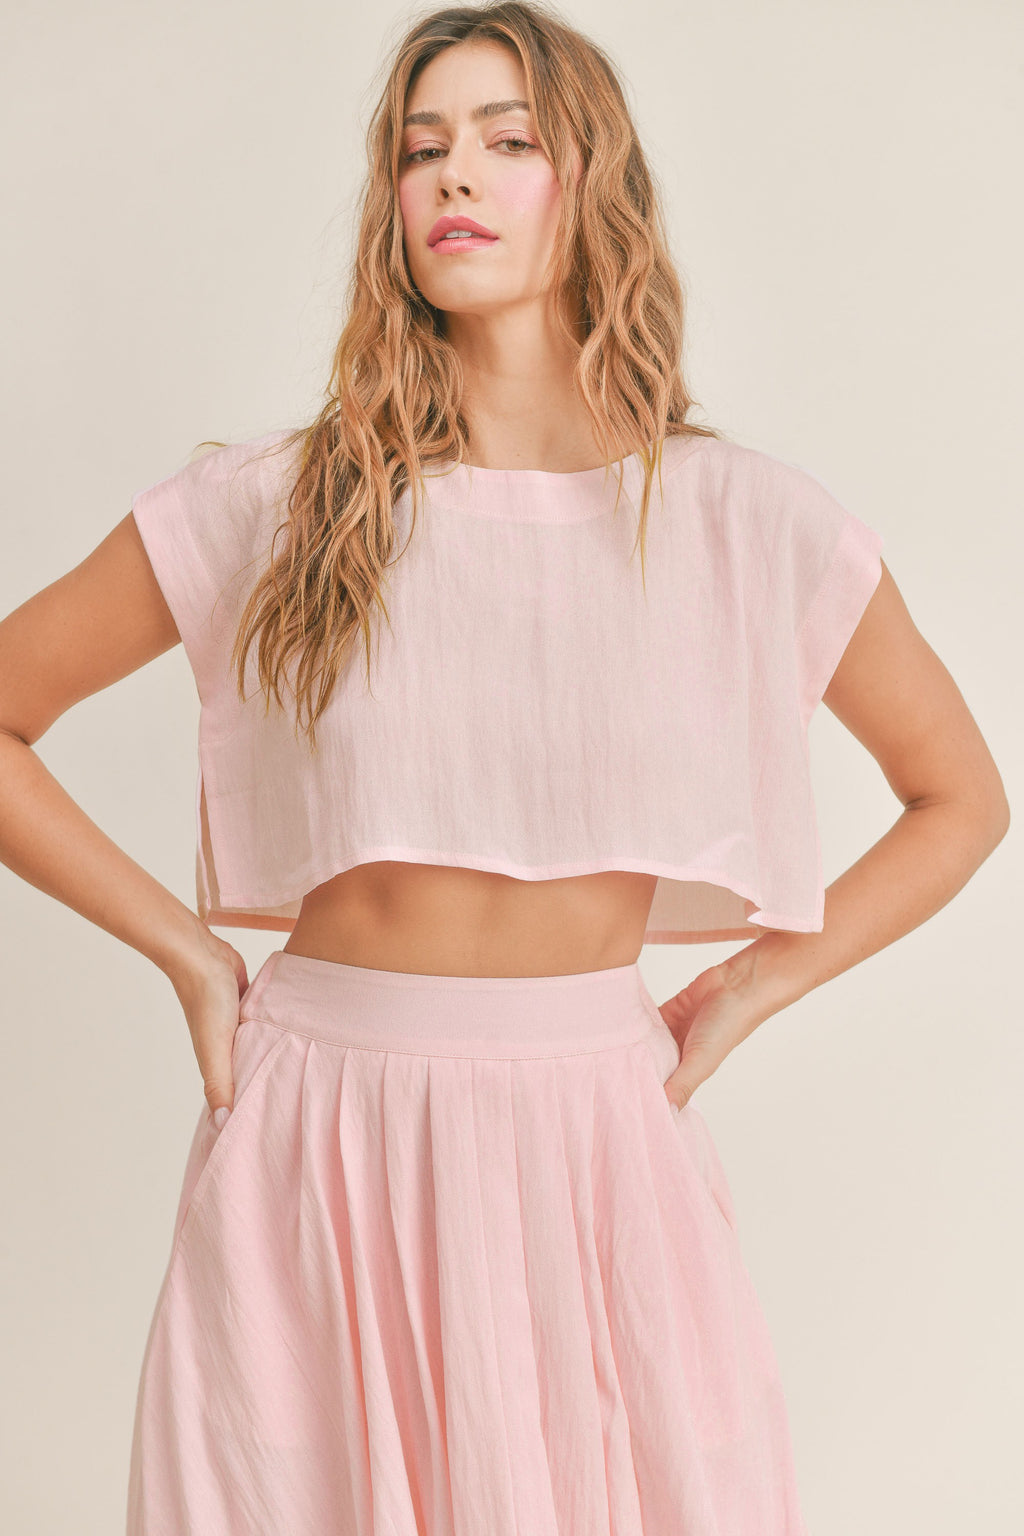 Pink Crop Top and Midi Skirt Set